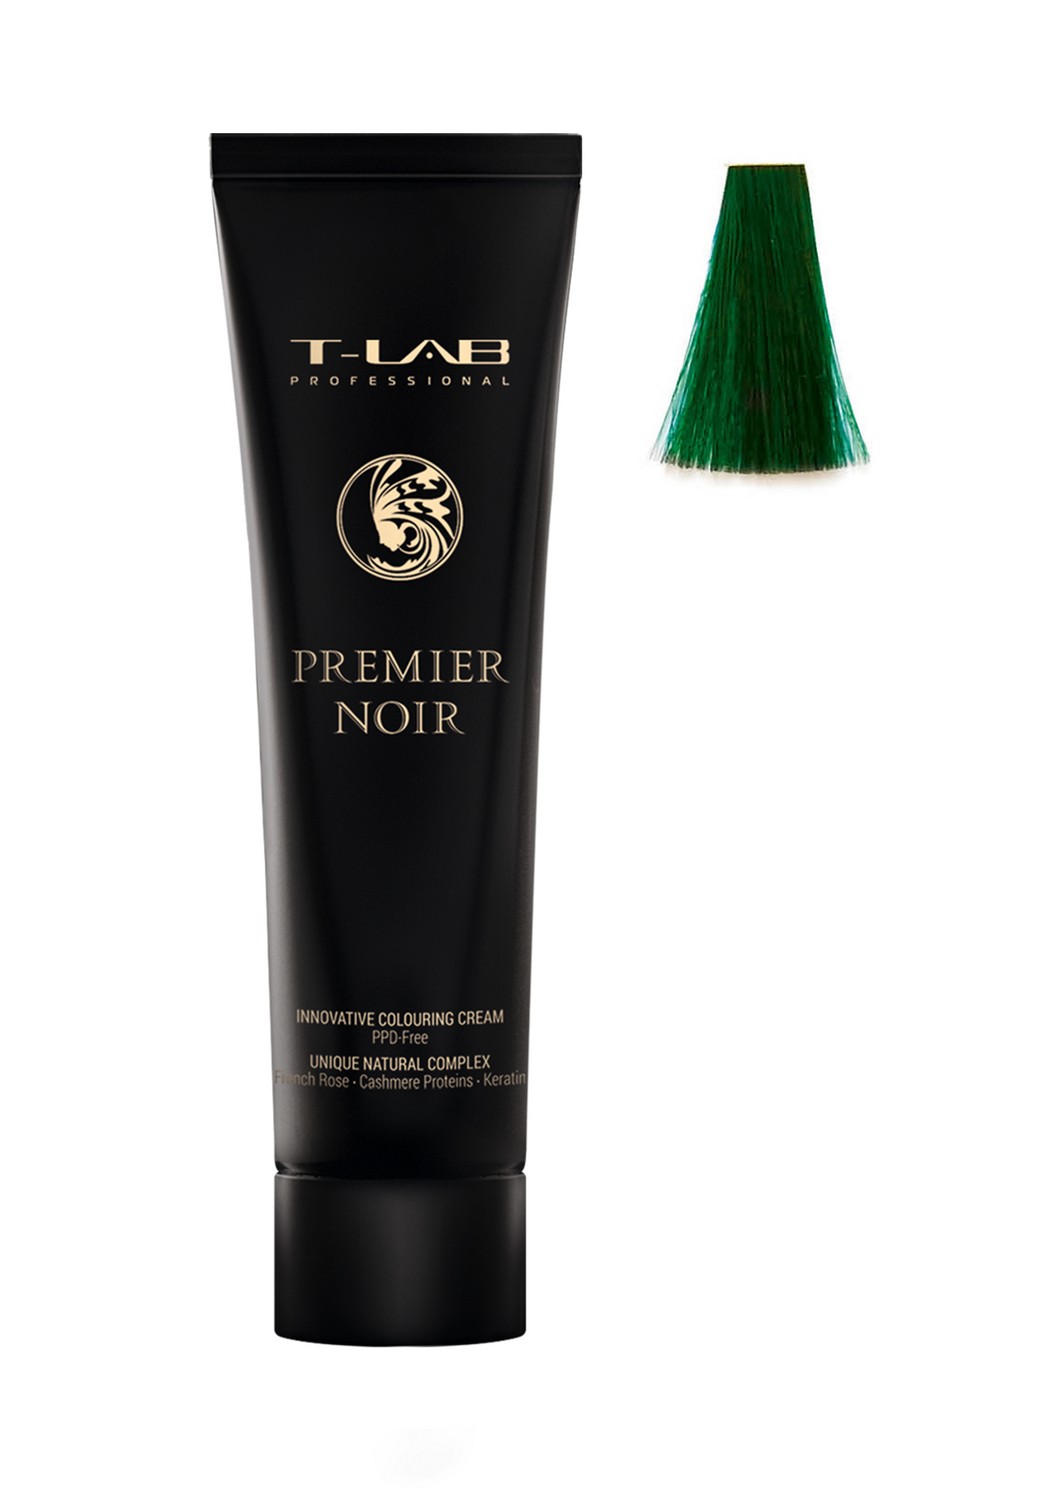 Крем-фарба T-LAB Professional Premier Noir colouring cream, Green - фото 2